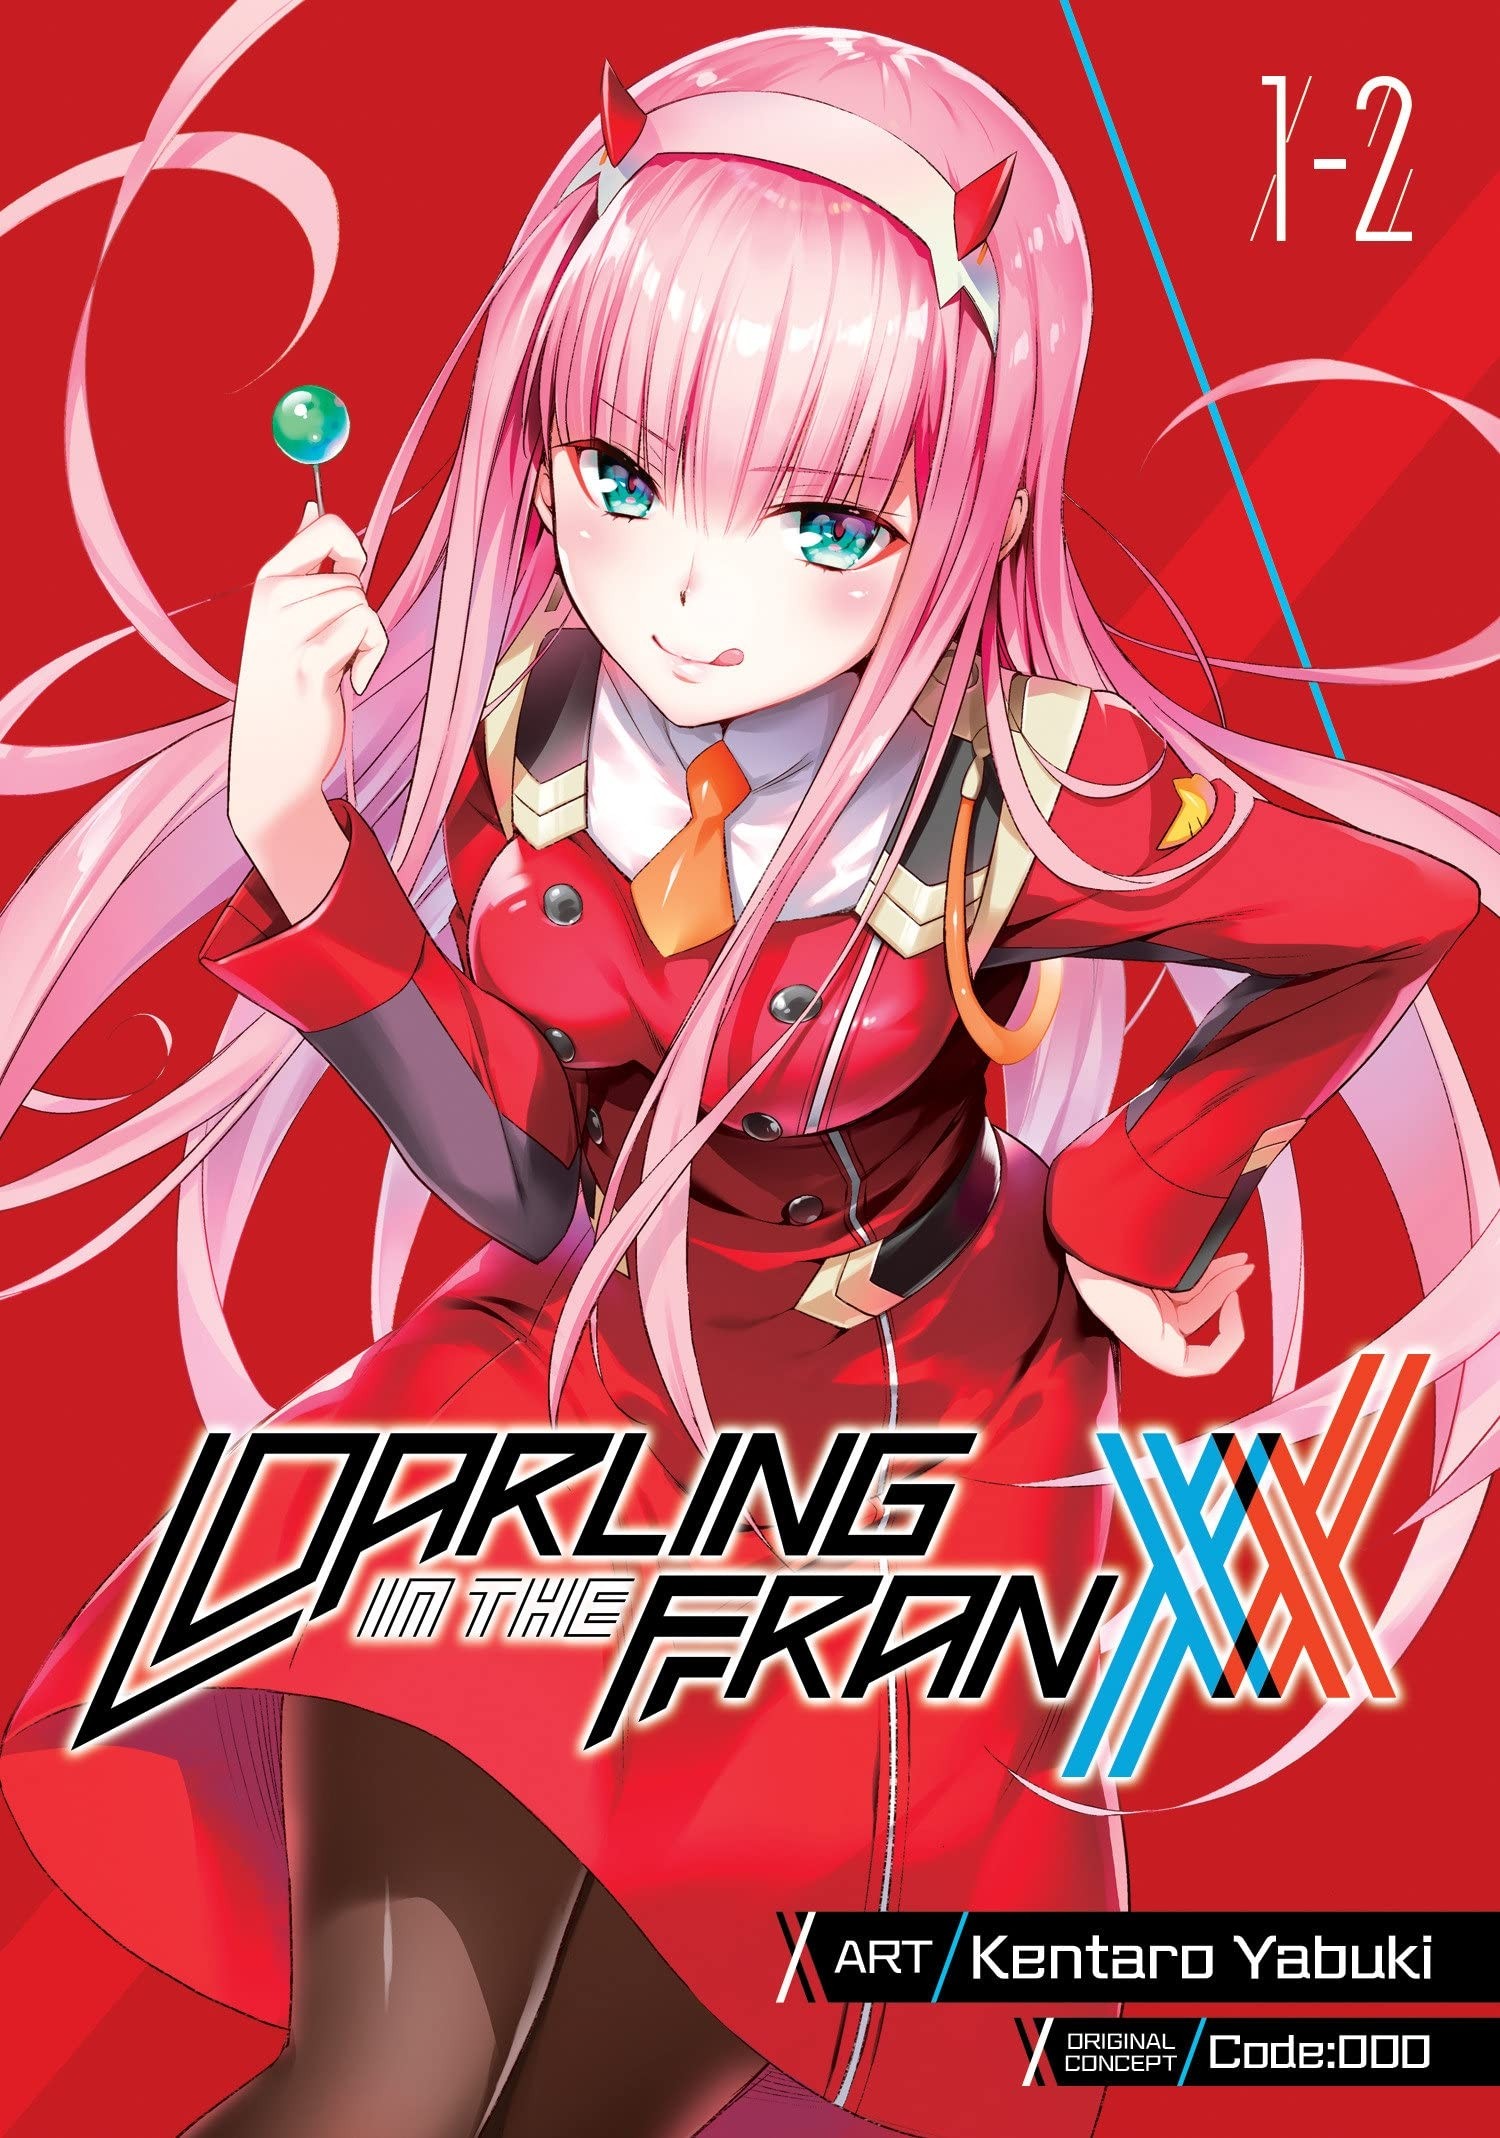 Darling in Then FranXX, Vol. 01-02